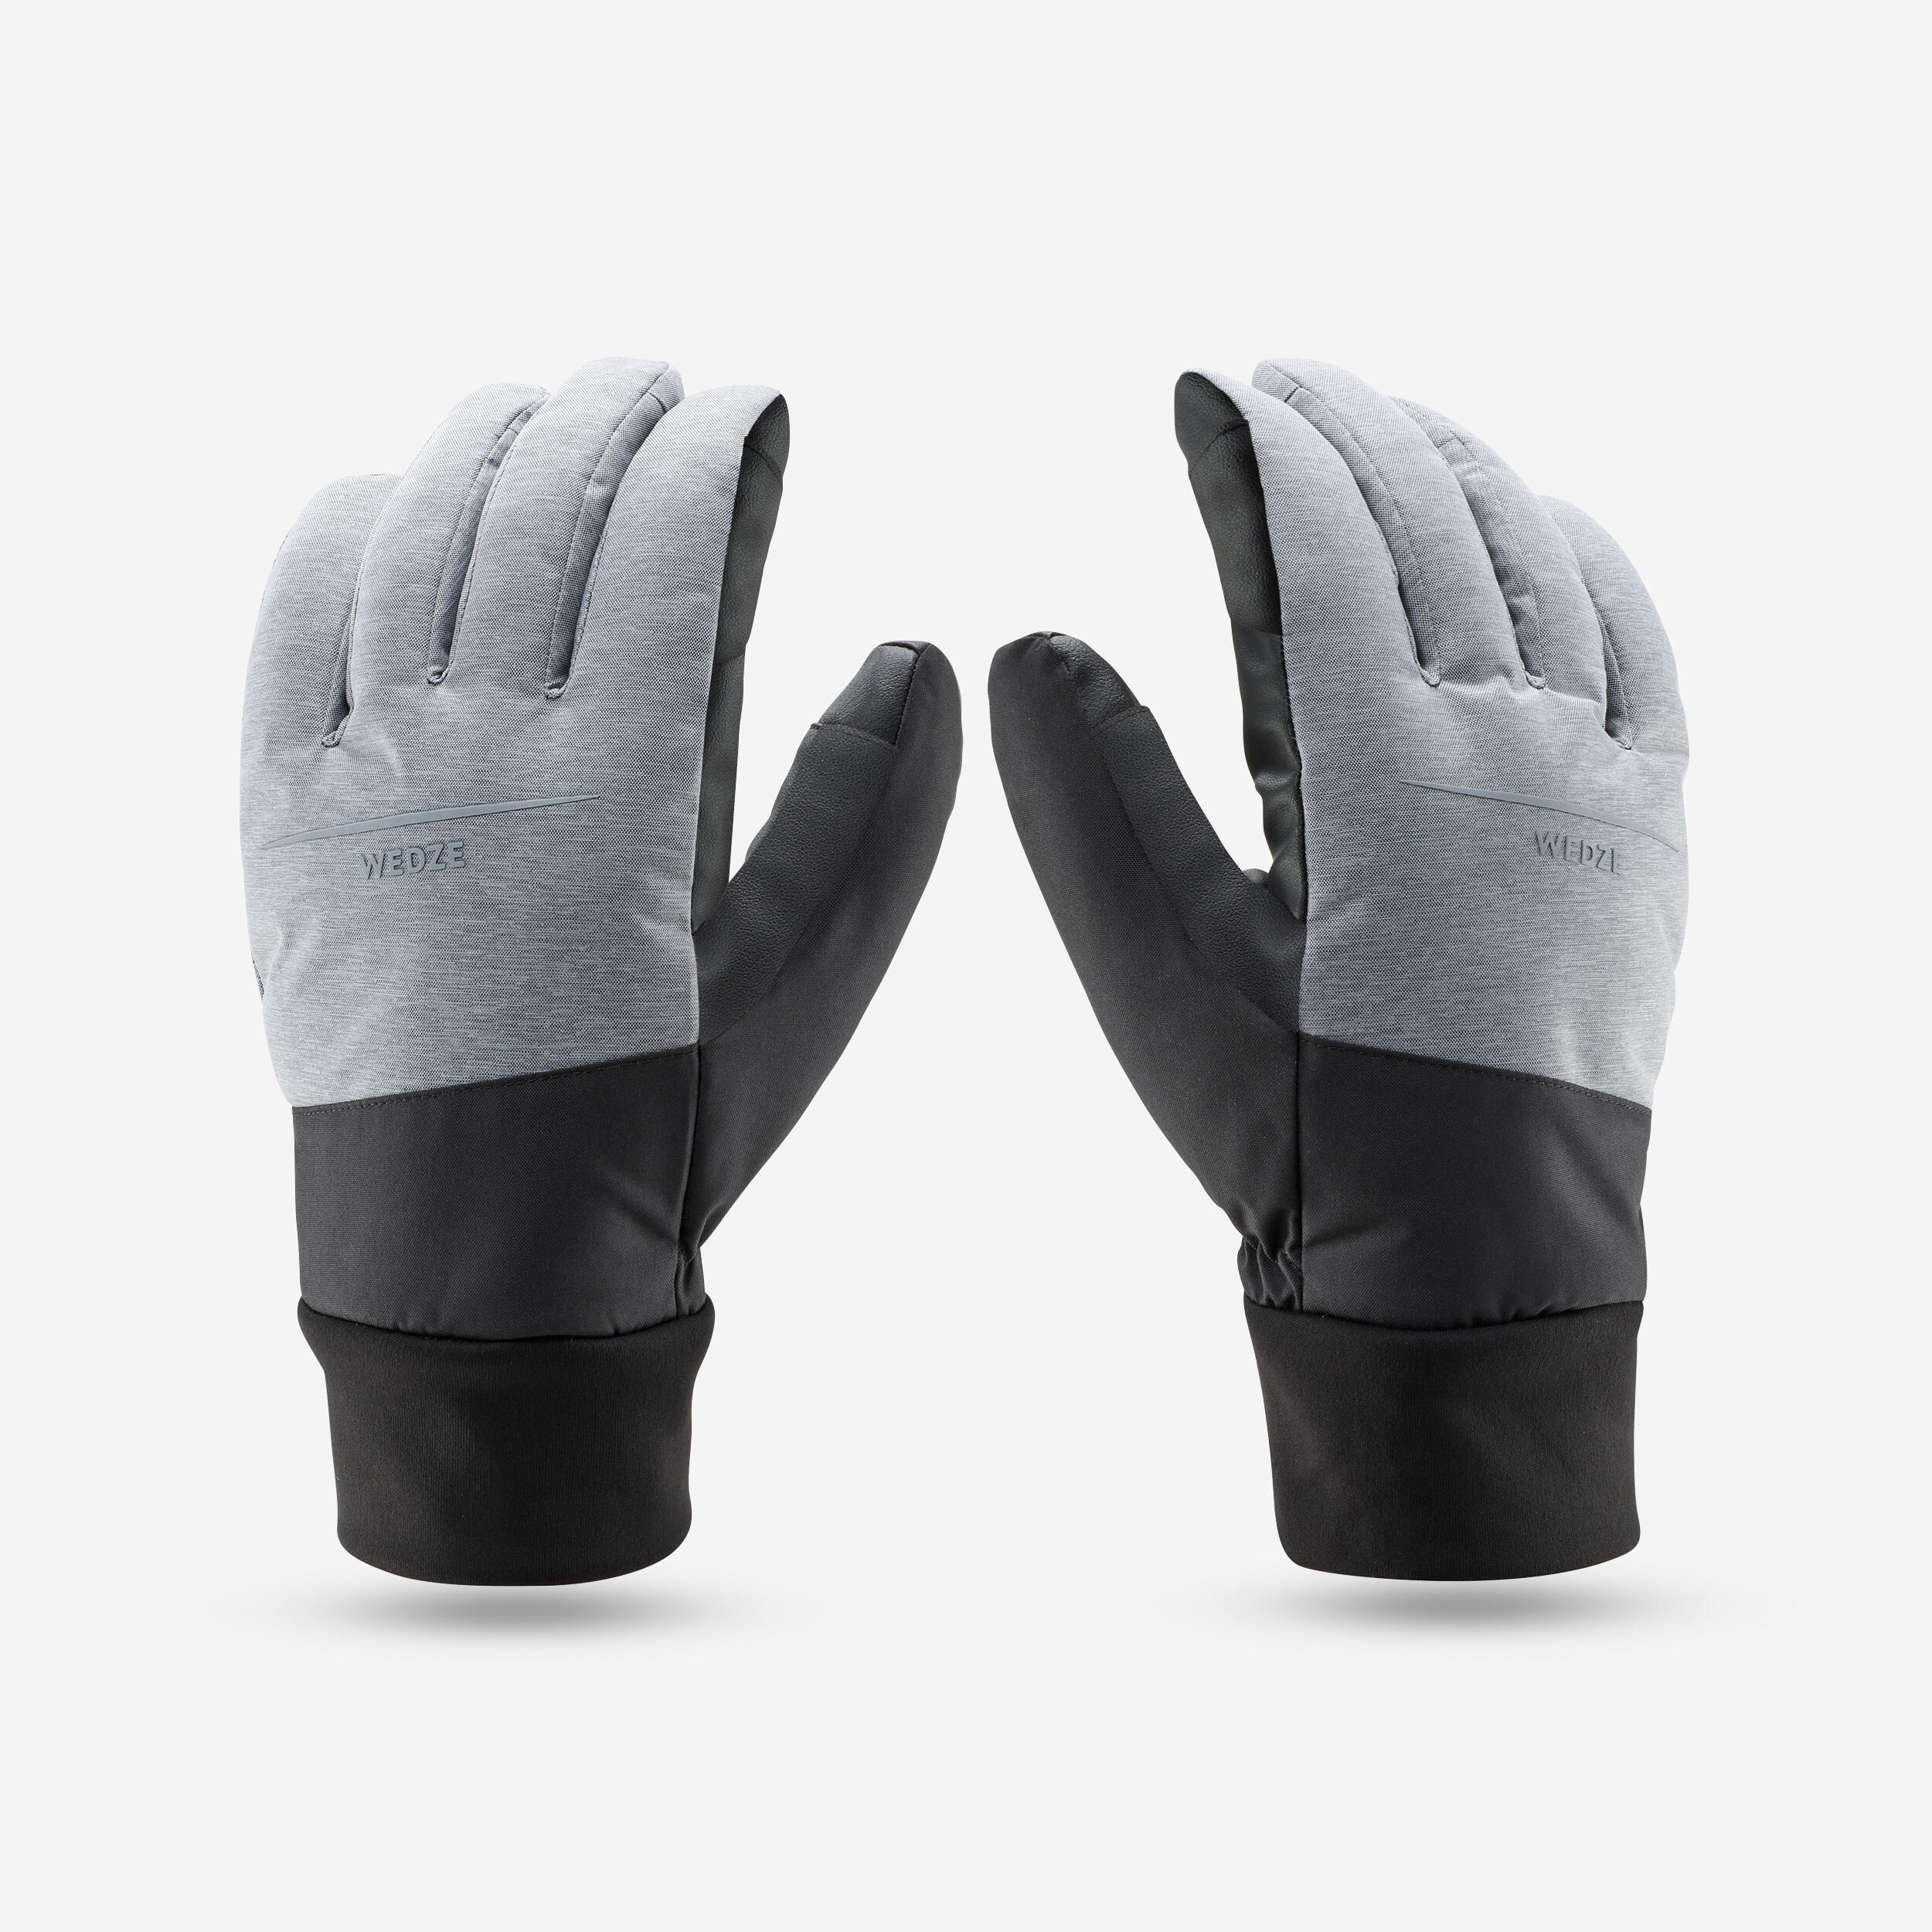 gants de ski adulte, 100 light gris perle et noir - wedze